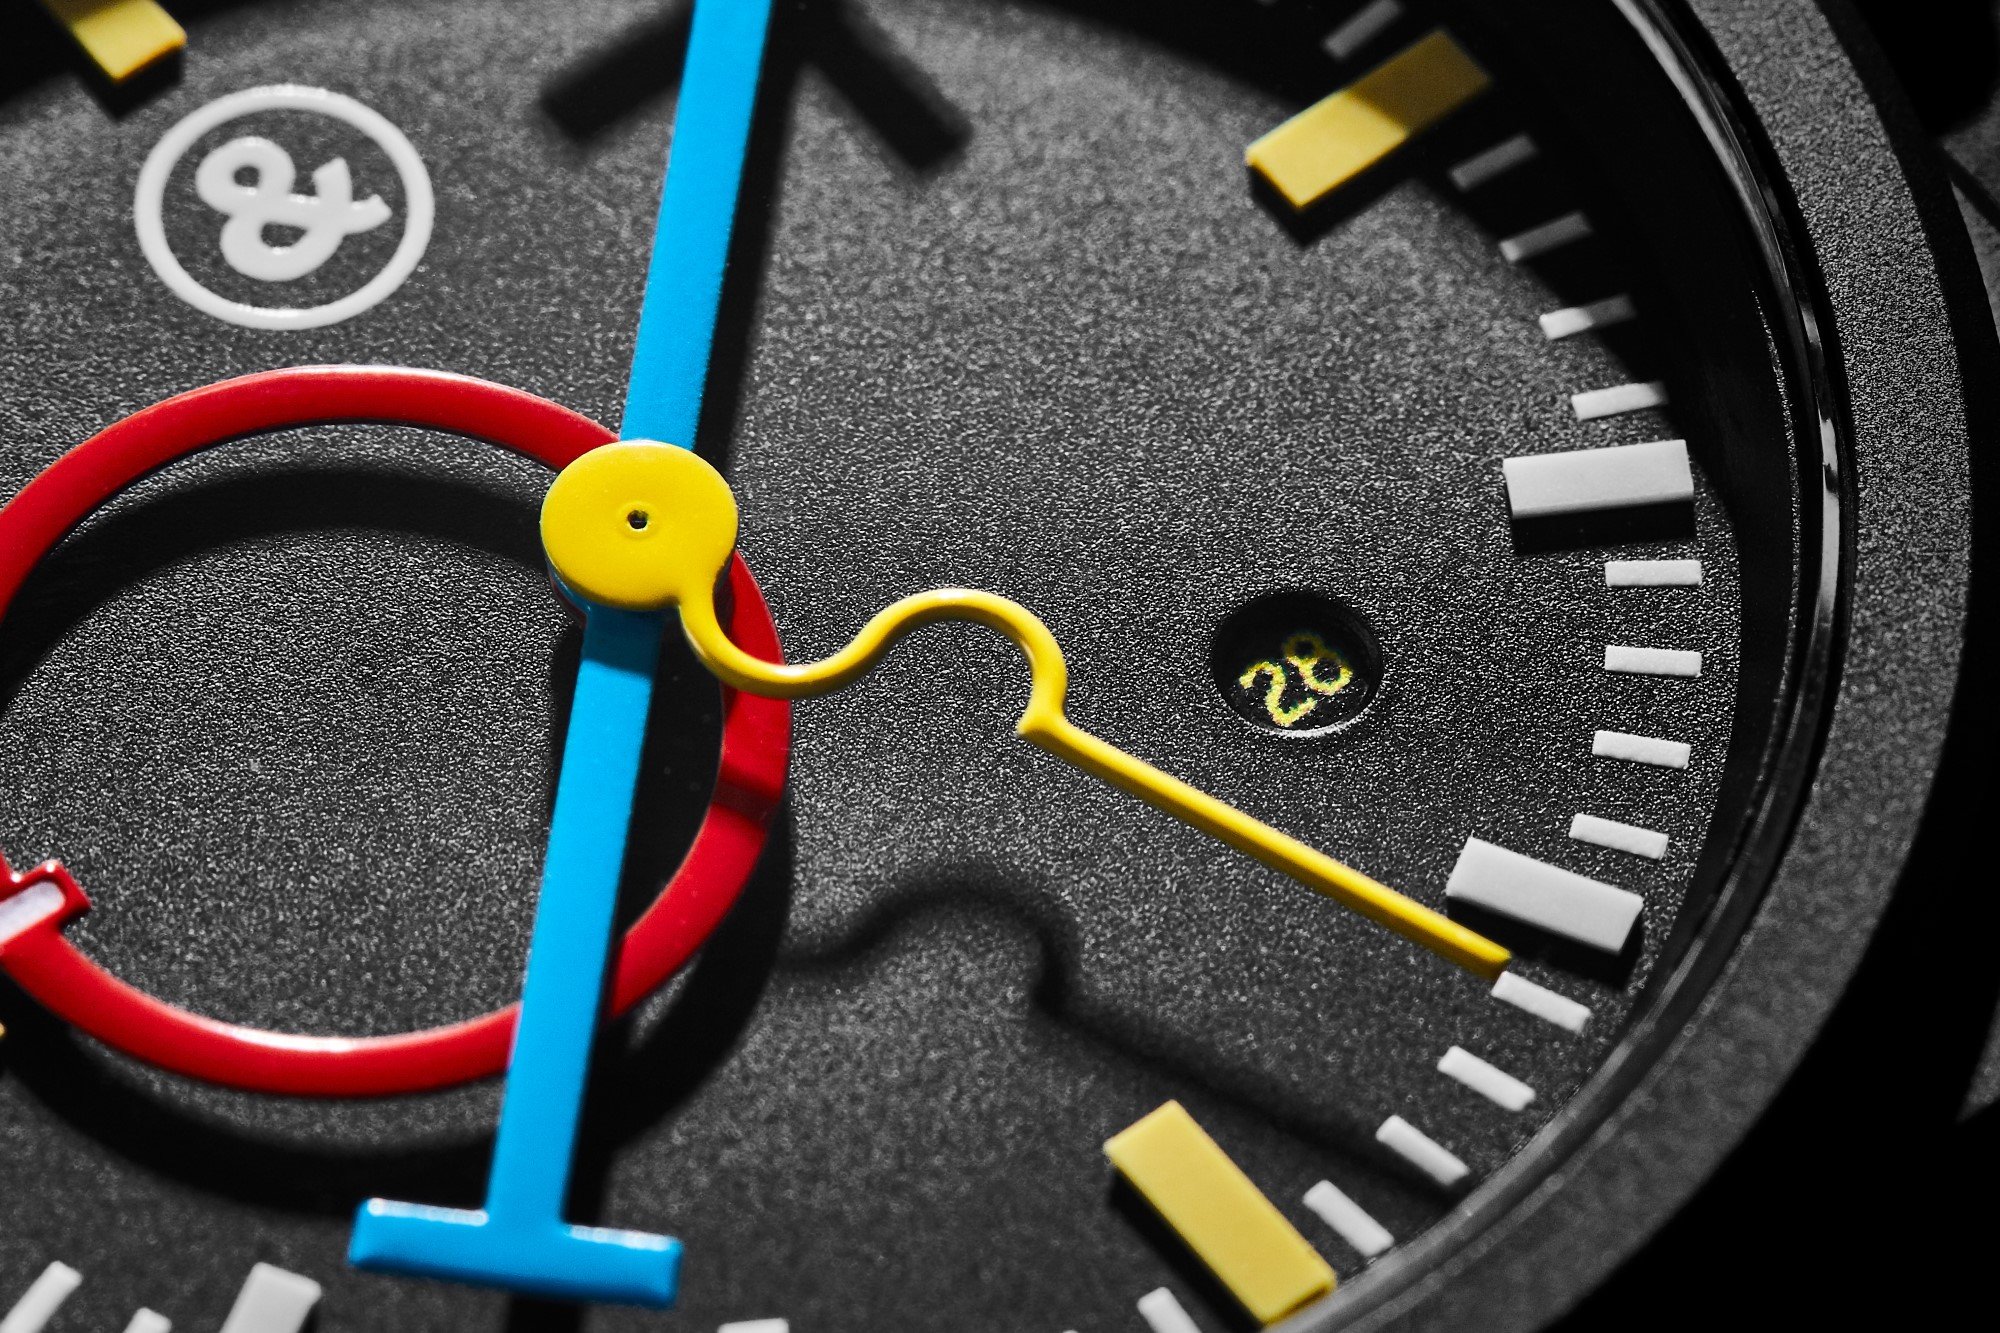 Grail Watch объединяет Bell & Ross и Alain Silberstein для создания часов Black Ceramic Trilogy